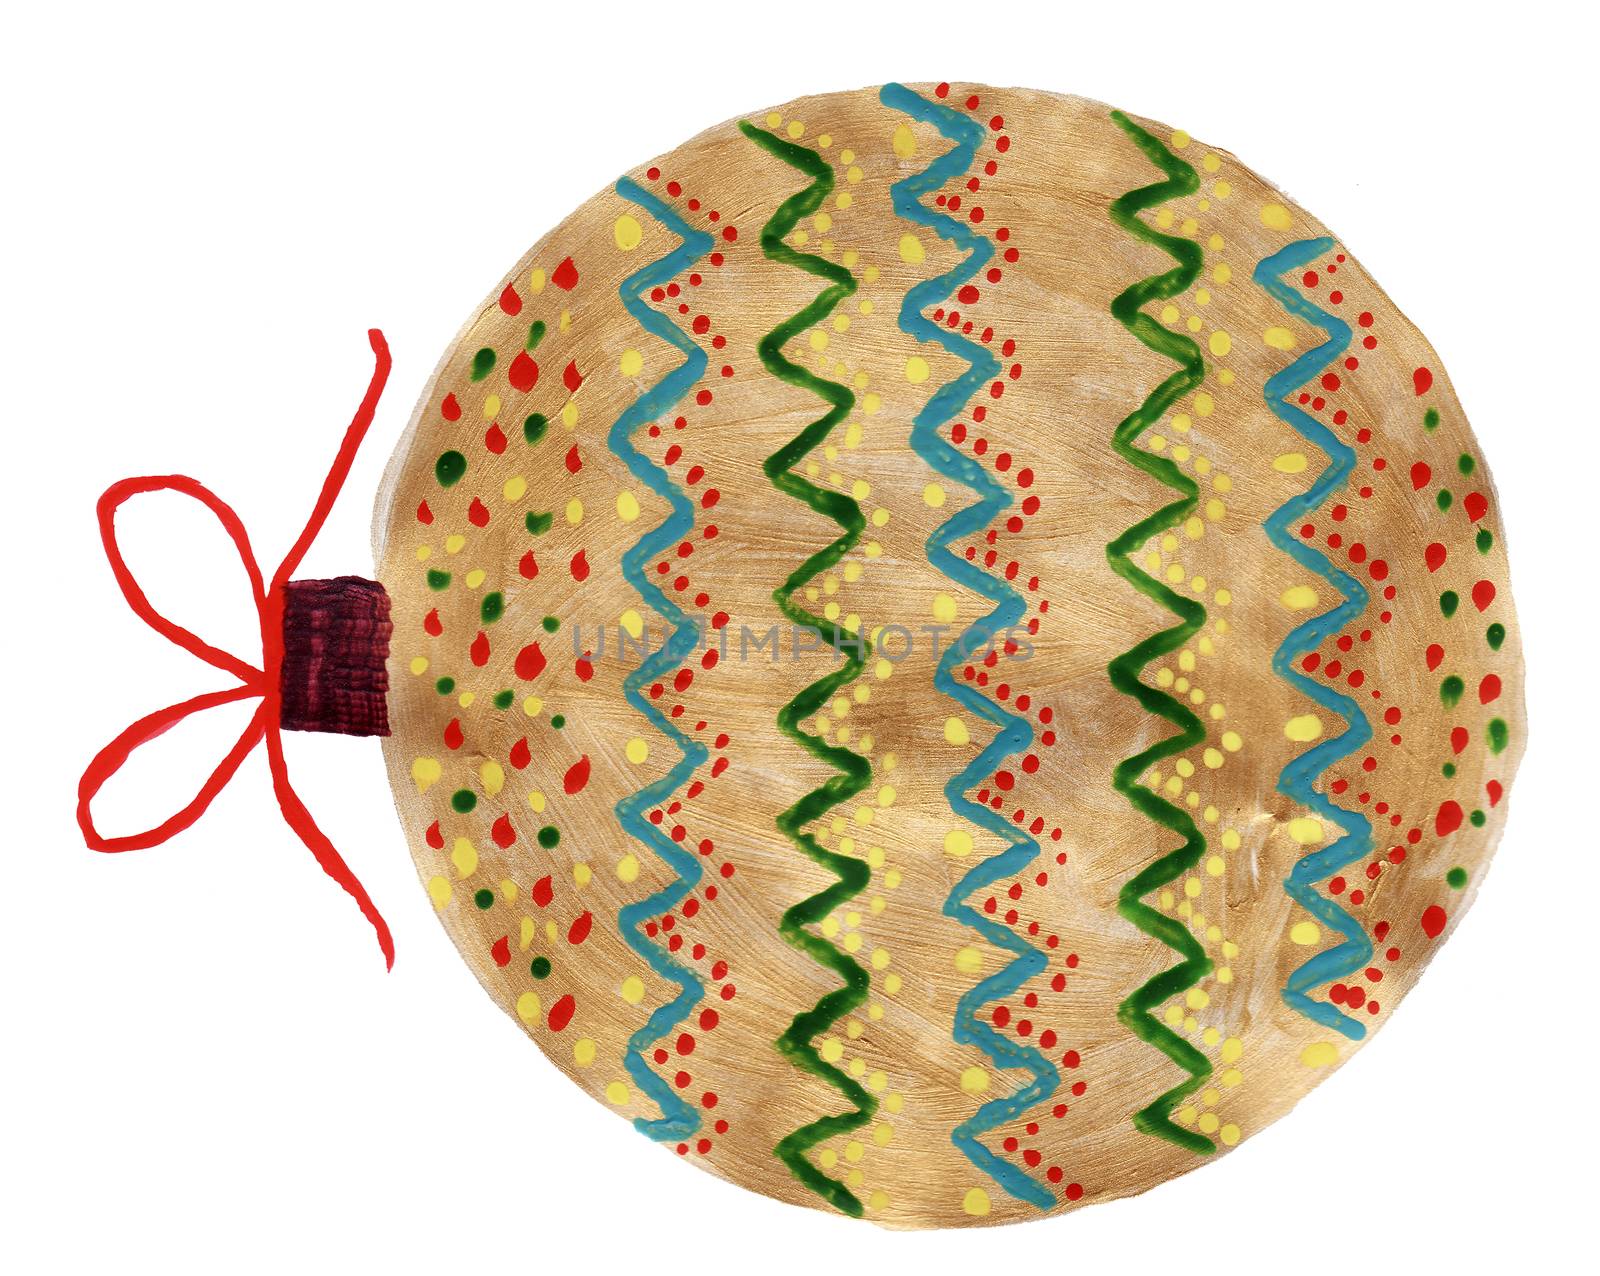 Hand drawn Christmas ball for festive season decoration. Isolated on white background illustration.